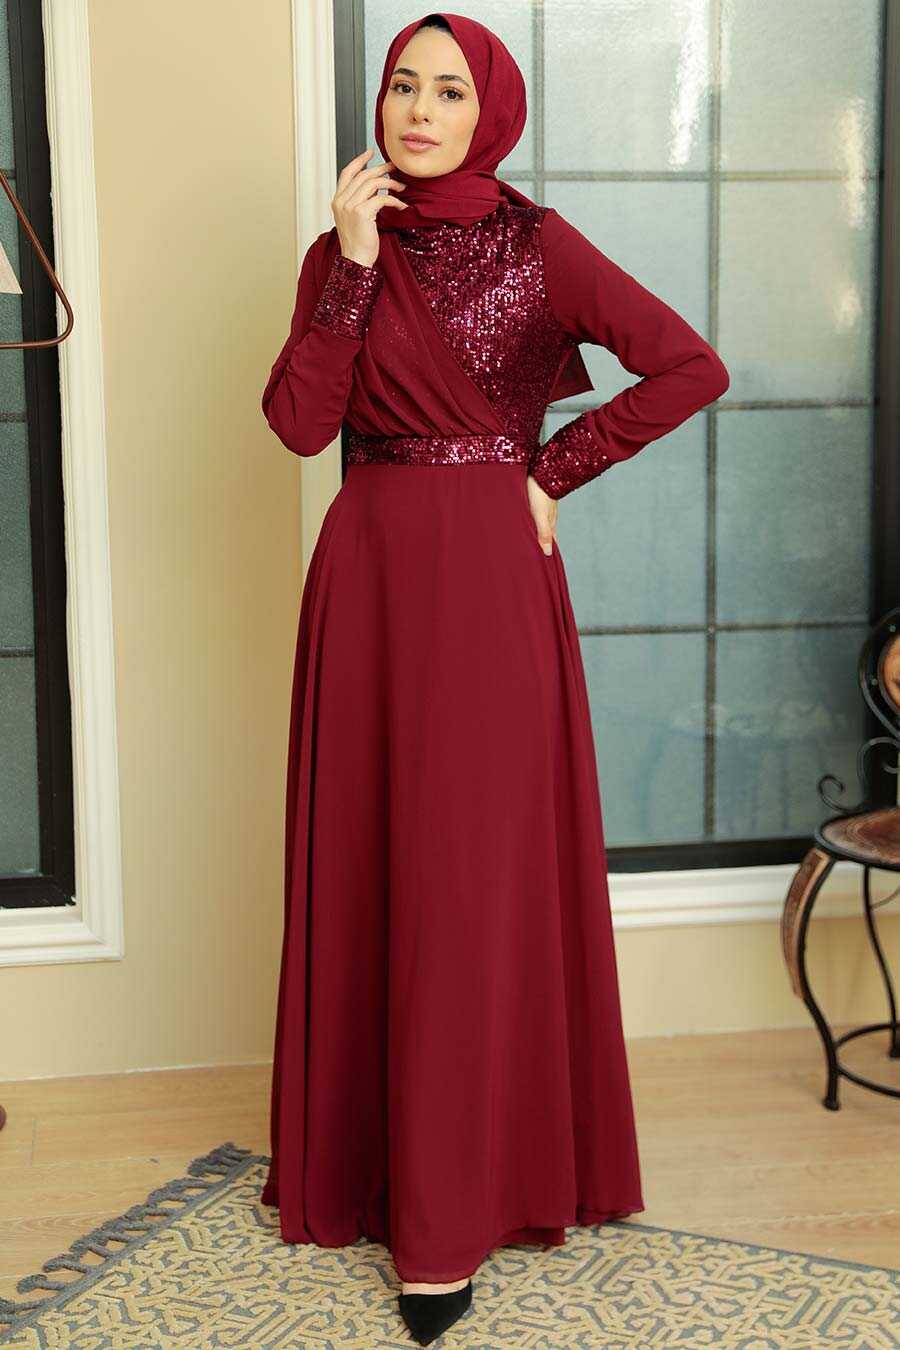  Long Sleeve Claret Red Muslim Bridal Dress 5793BR